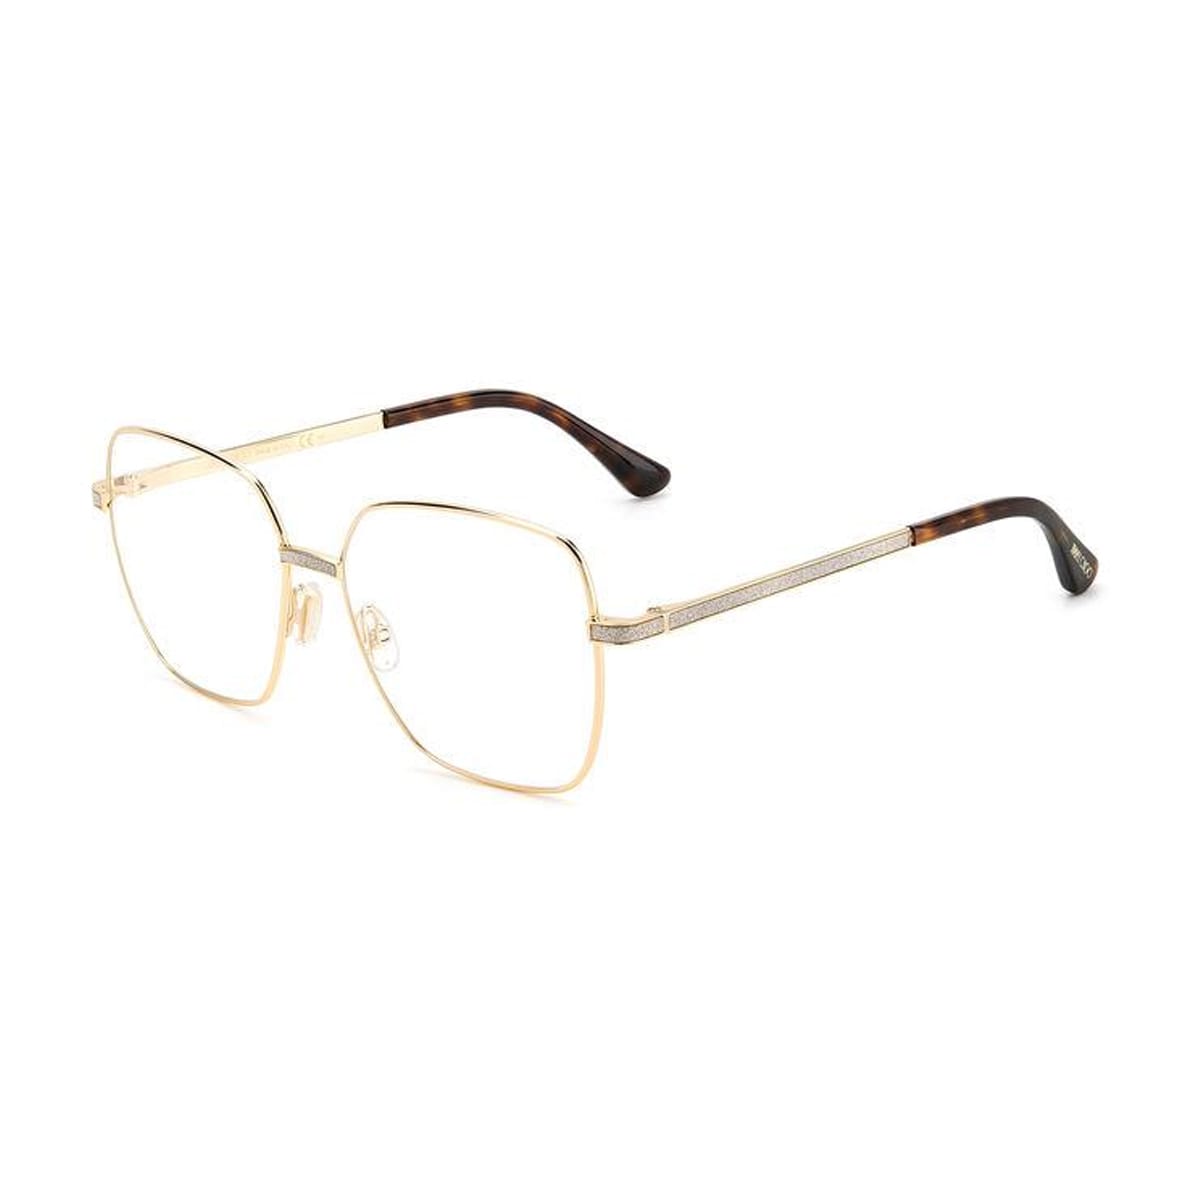 Jimmy Choo Eyewear Jc354 06j/15 Glasses